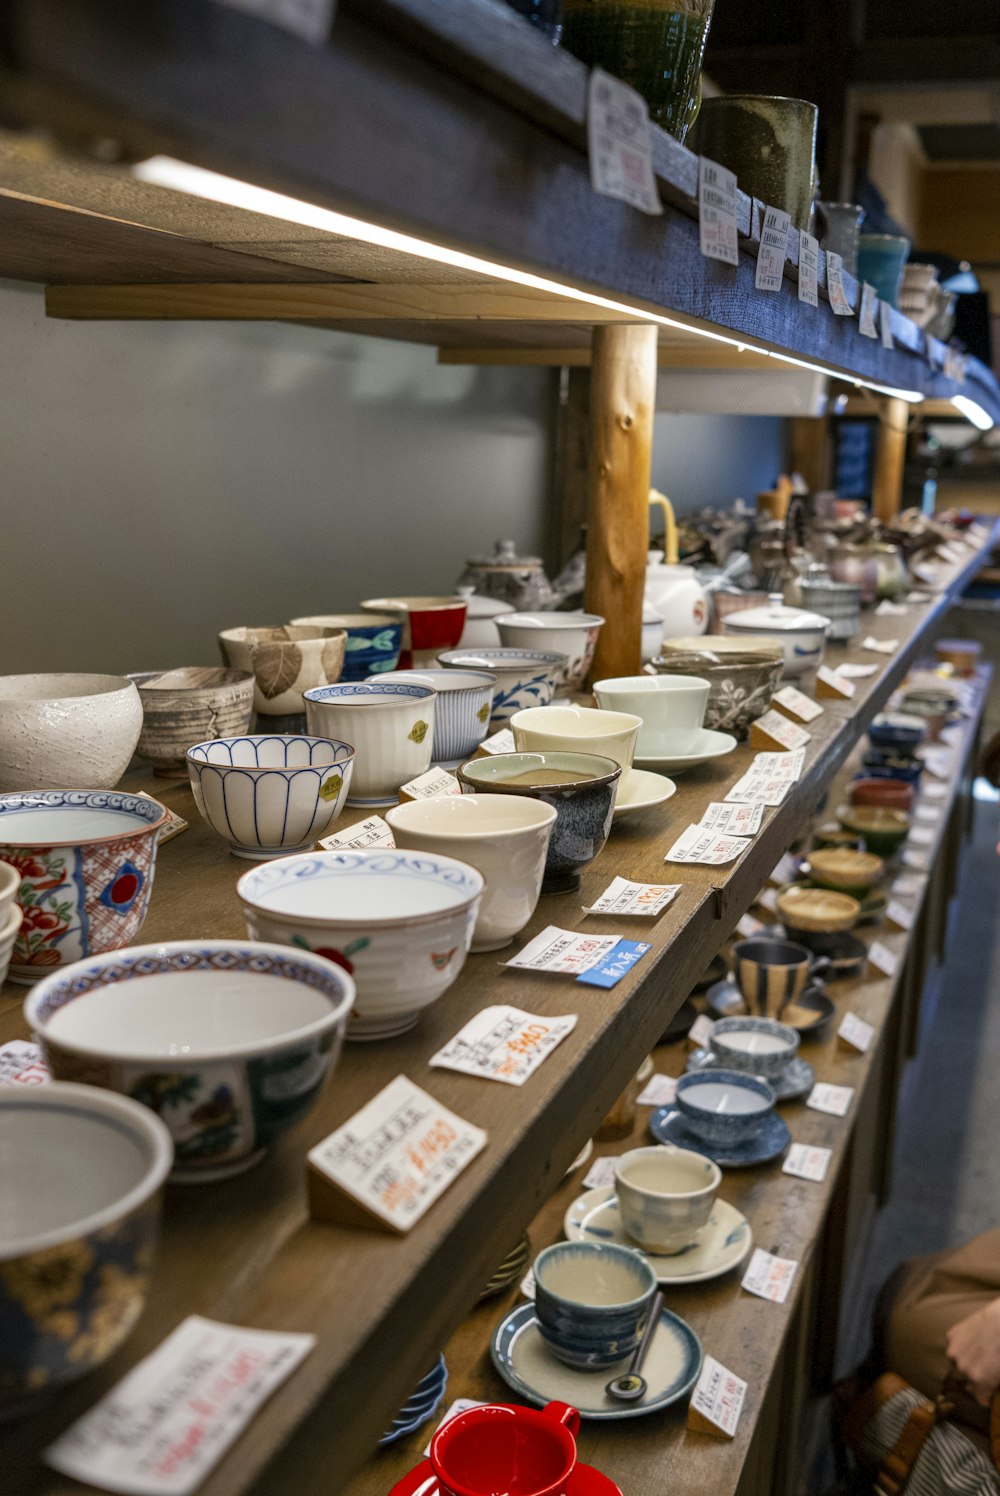 white ceramic bowls on brown wooden shelf